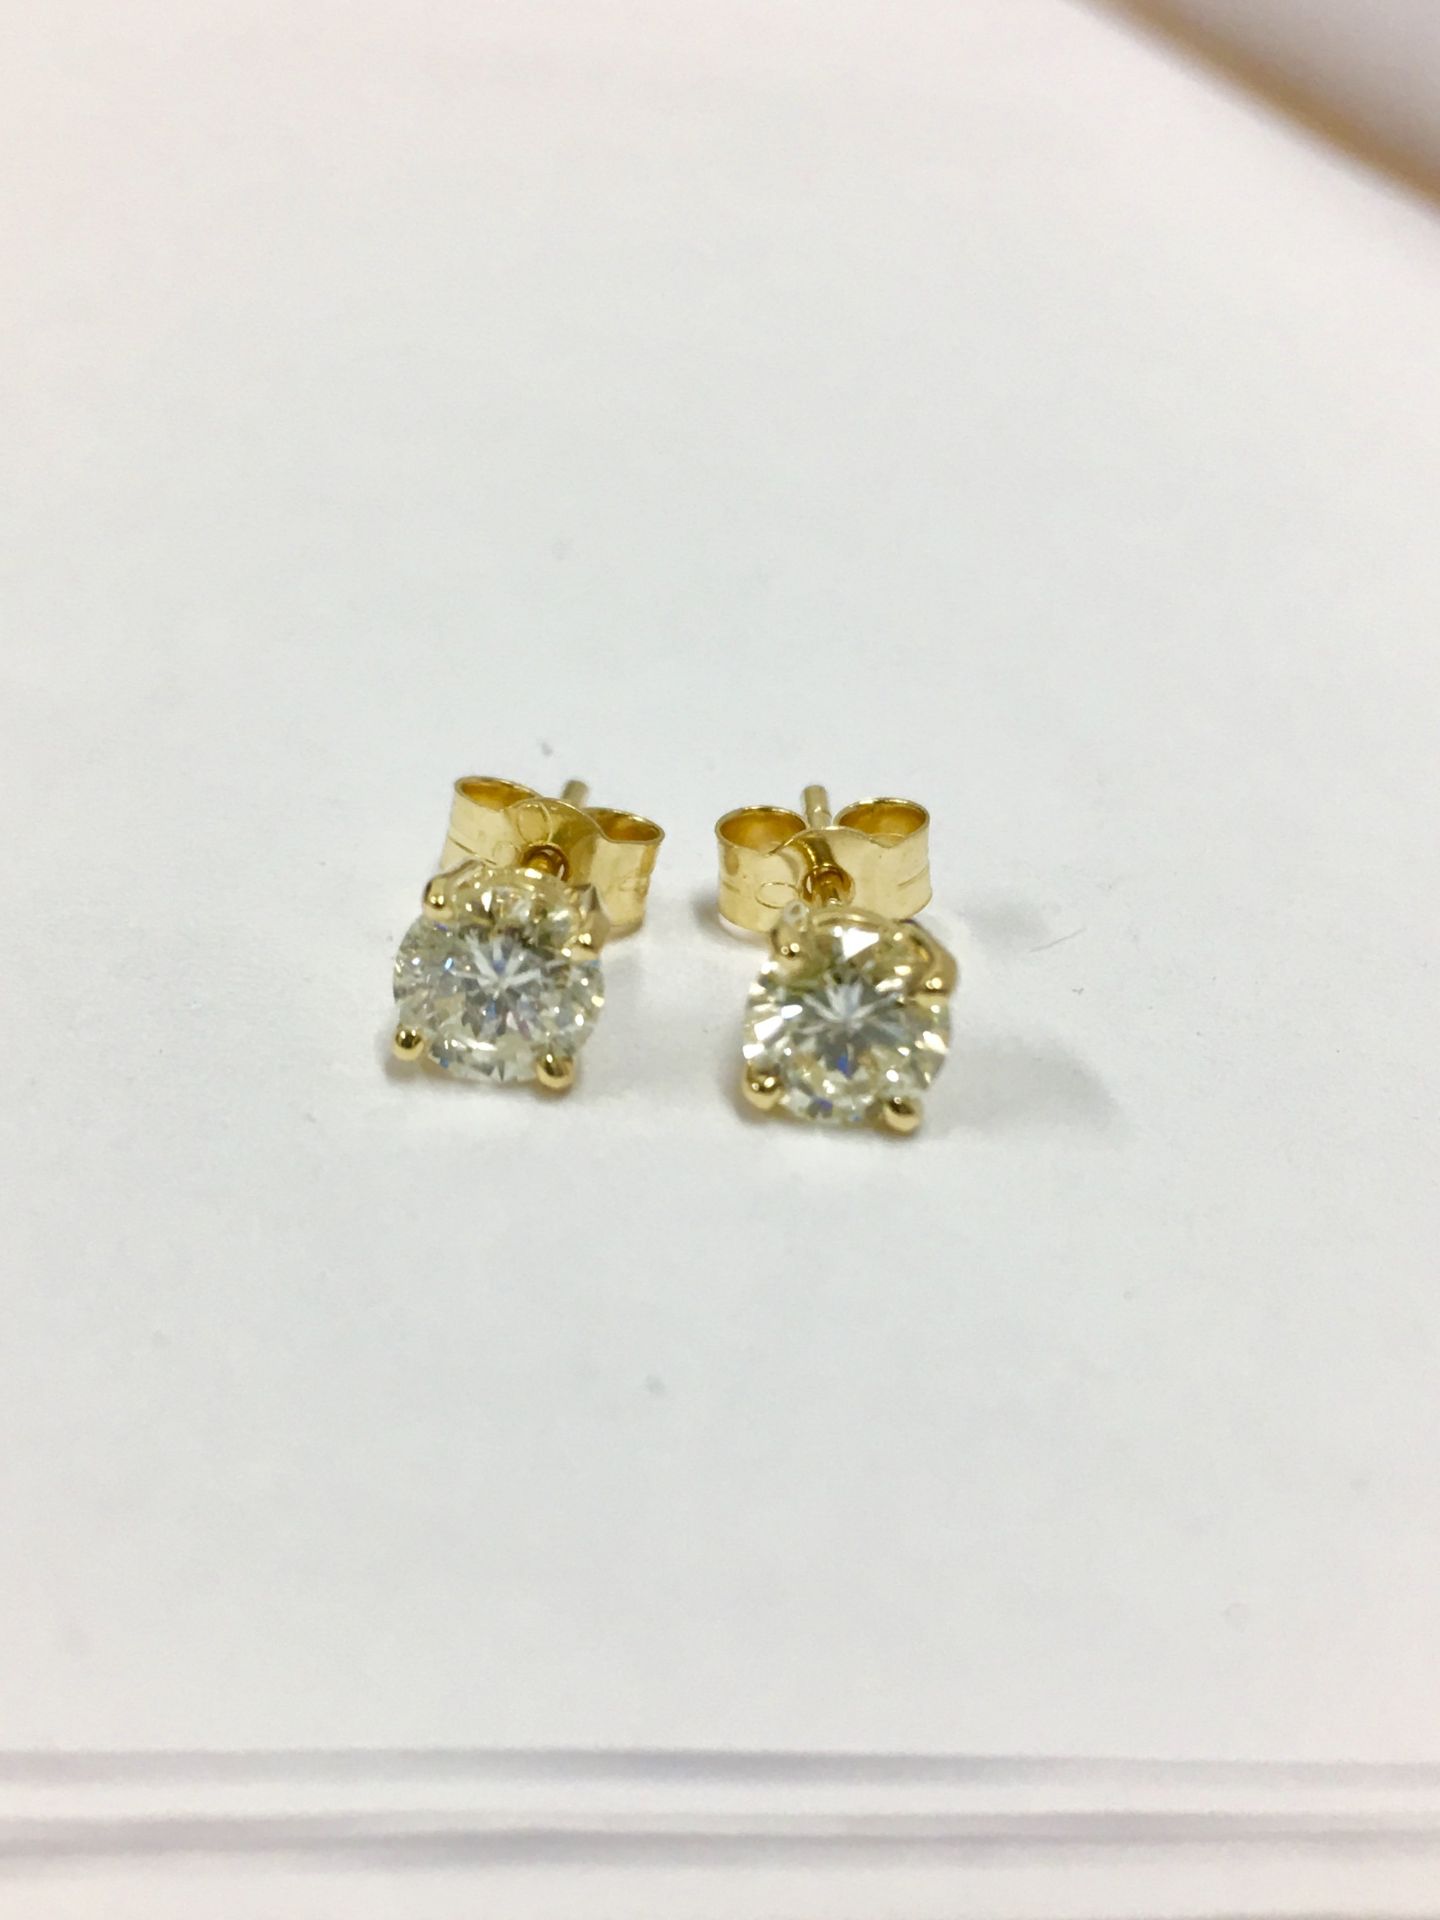 1ct diamond solitaire earrings,2 x 0.50ct h colour vs grade (enhanced diamonds) 2gms 18ct yellow .uk